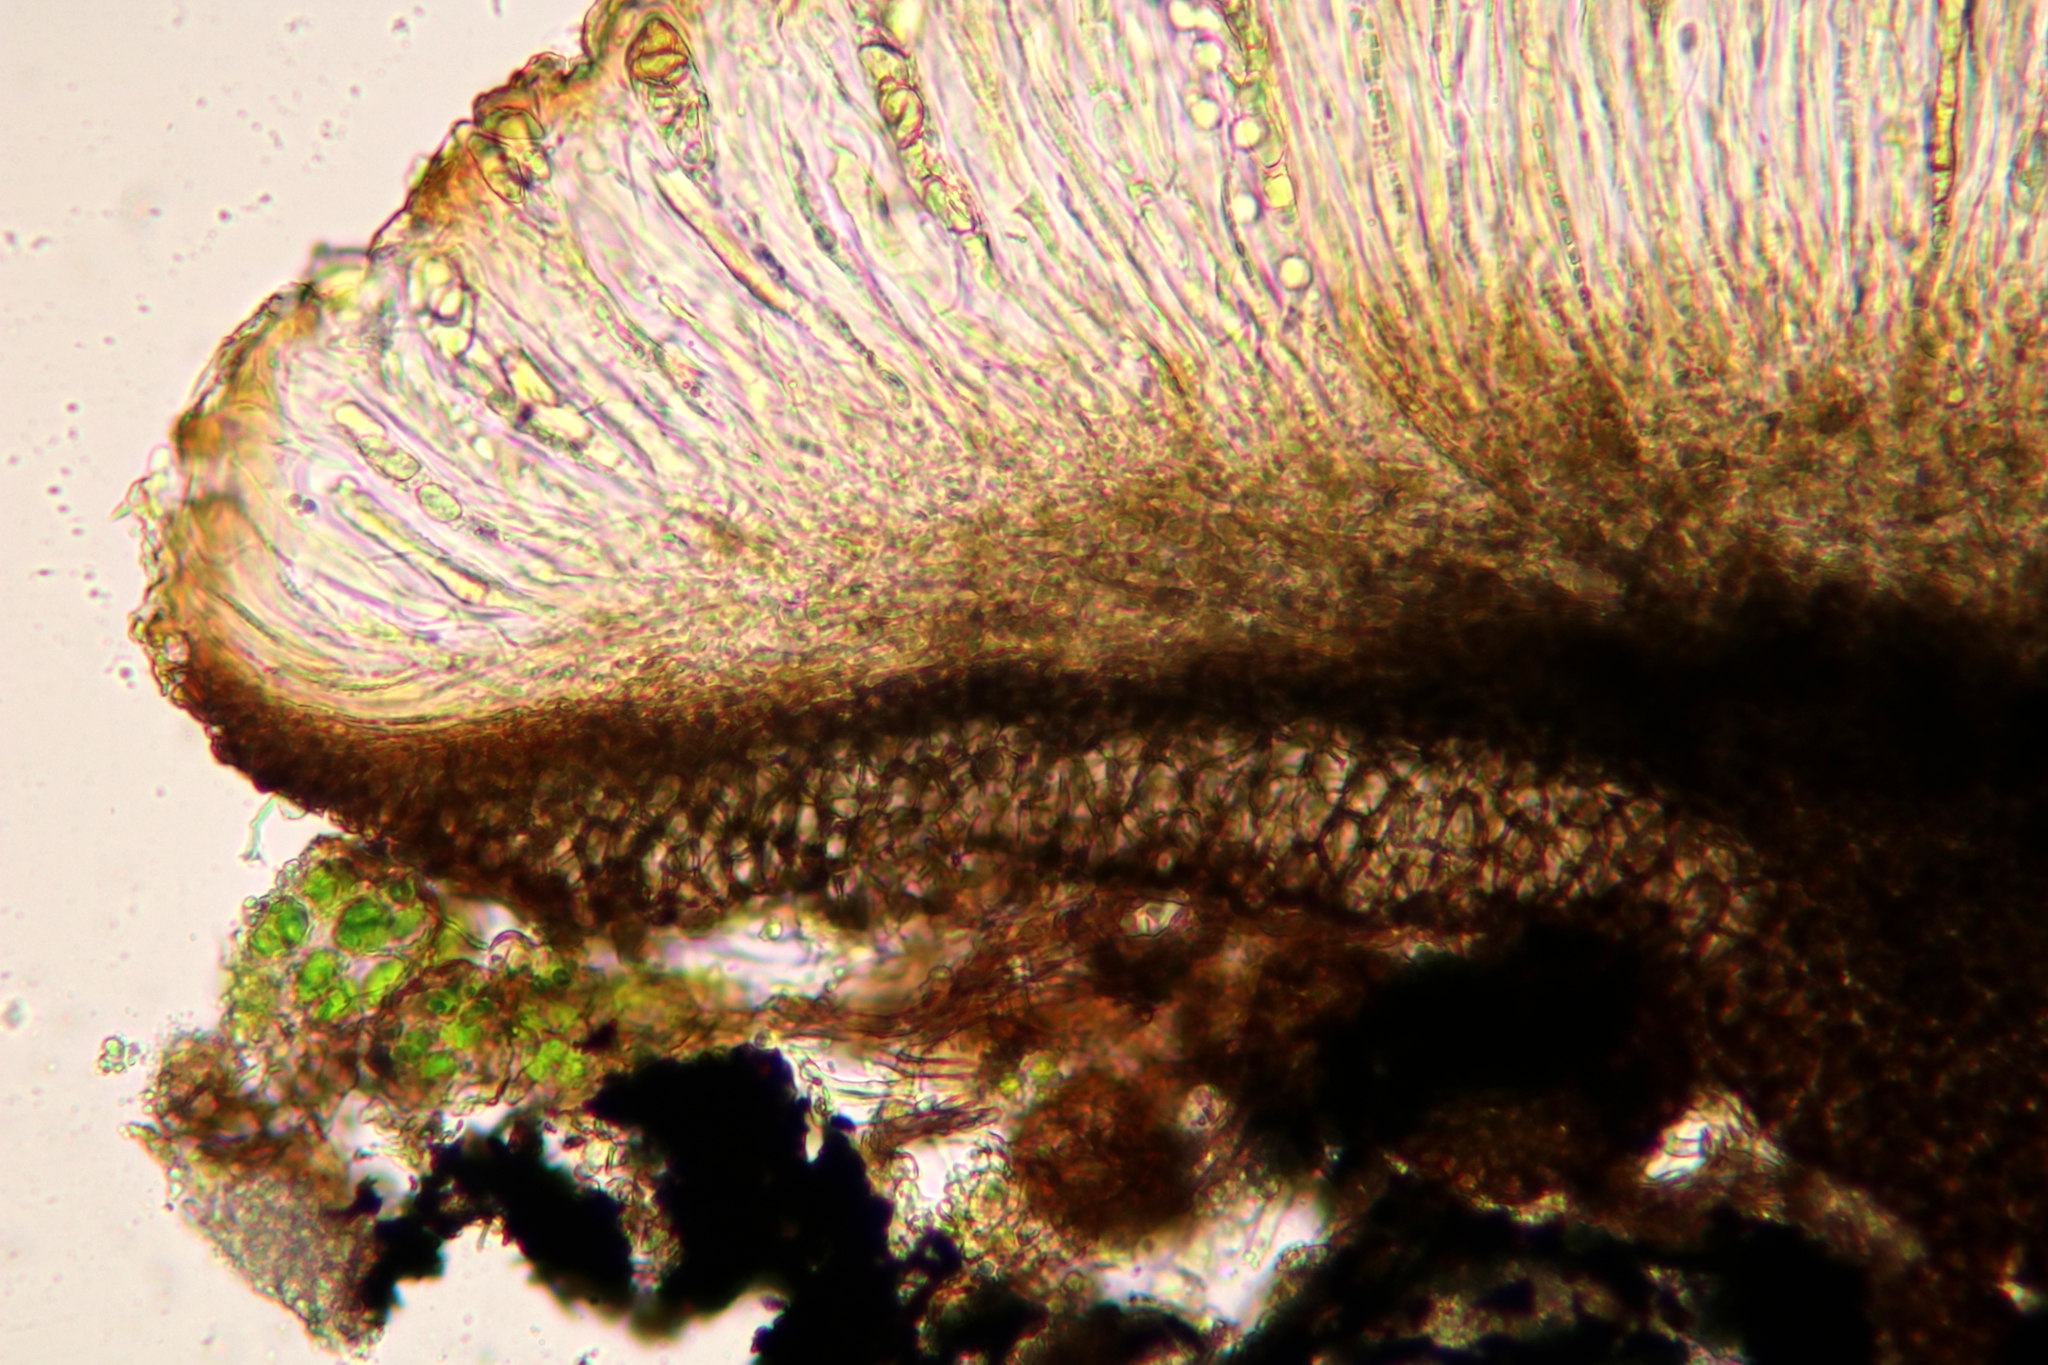 Placynthiella image